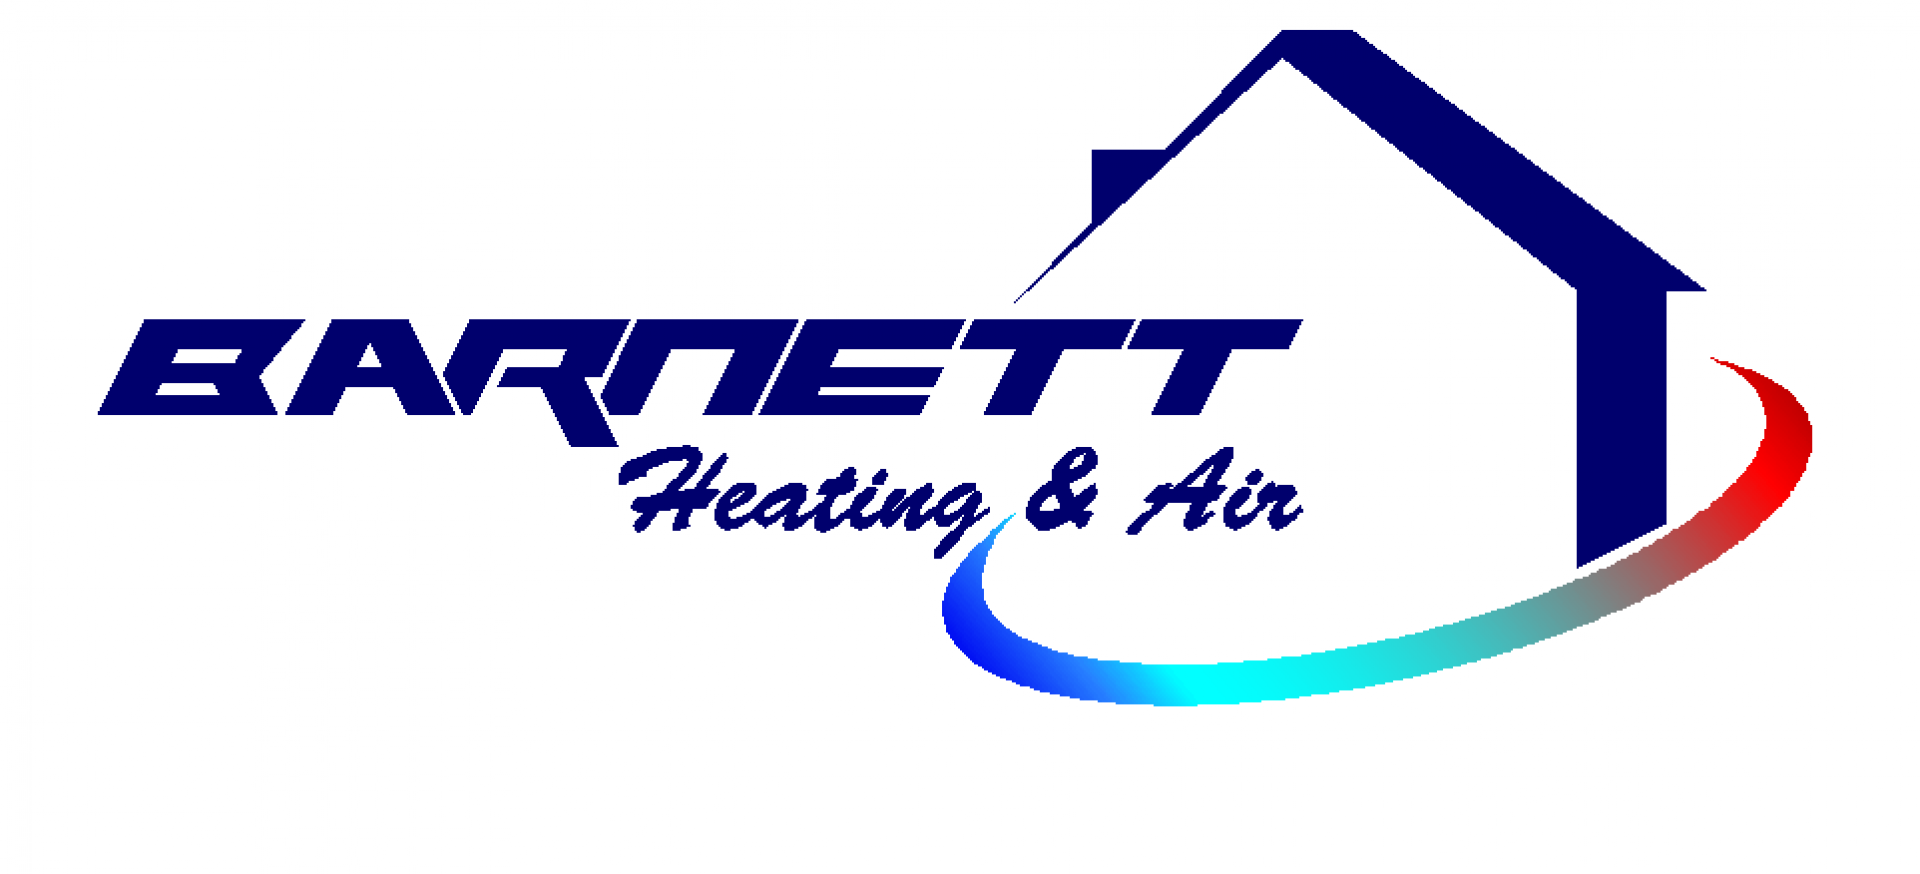 Barnett Heating & Air company logo